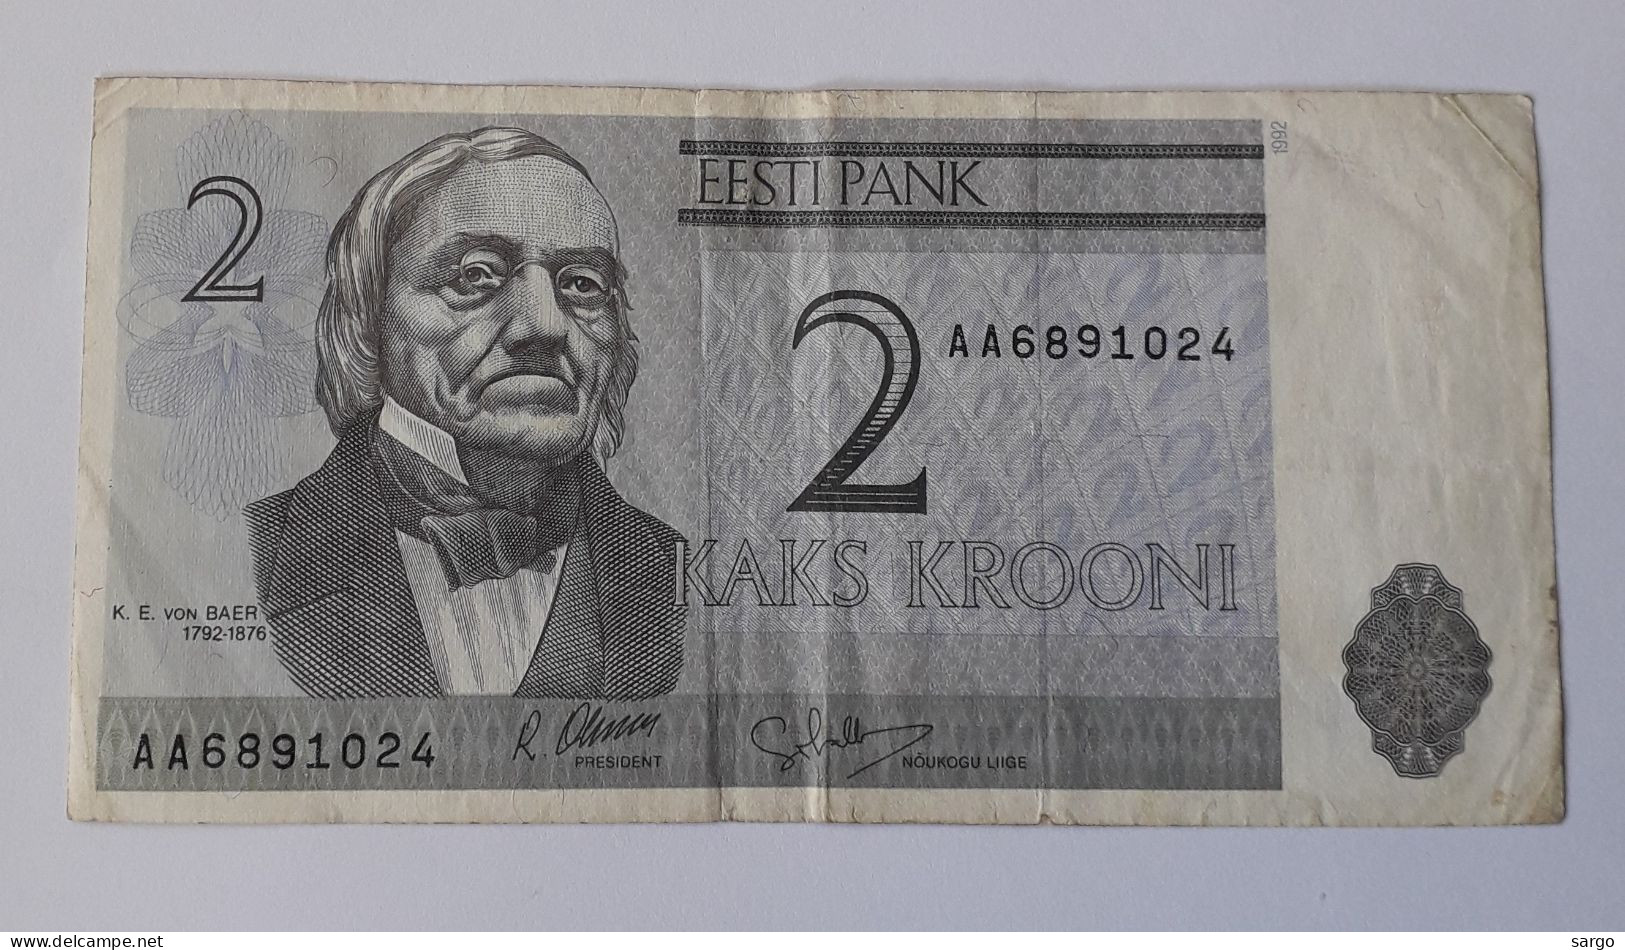 ESTONIA - 2 KROONI -  P 70 - 1992 -  CIRC - BANKNOTES - PAPER MONEY - CARTAMONETA - - Estonie